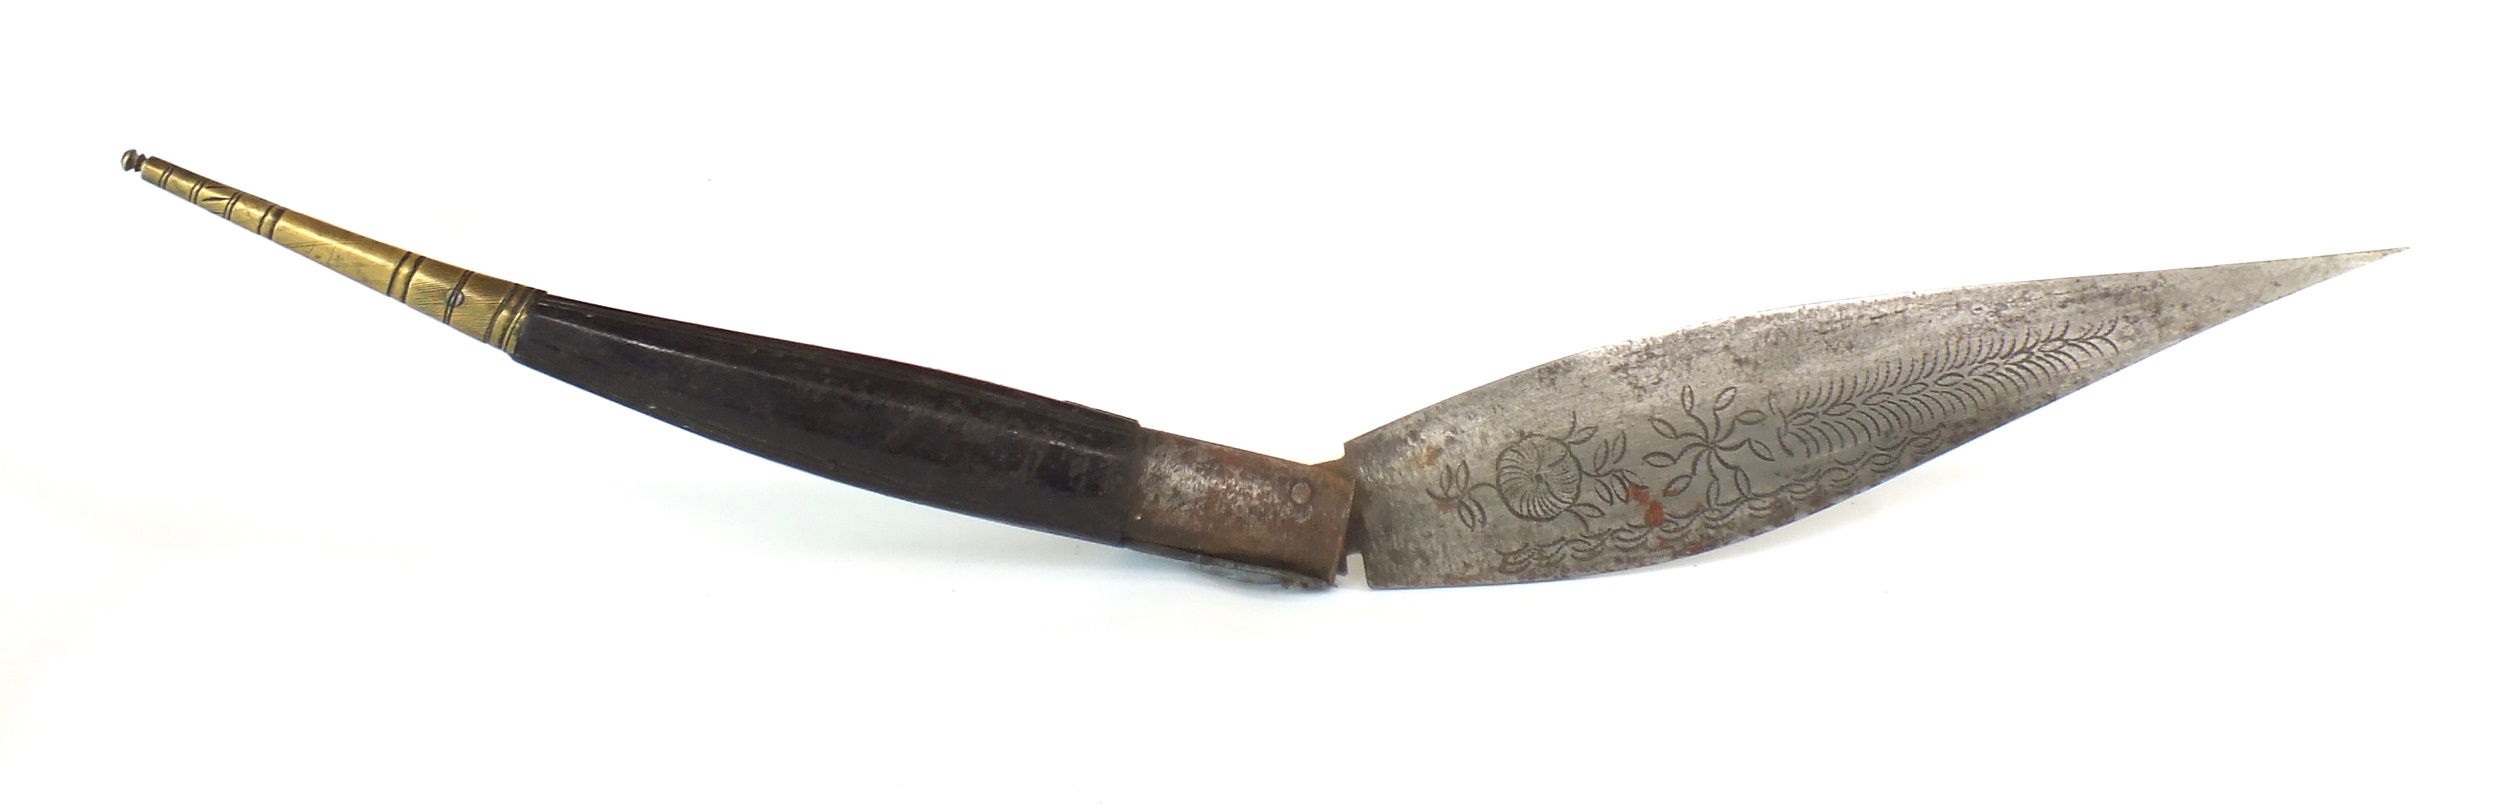 Spanish Navaja folding dagger, 19th century - Image 2 of 4